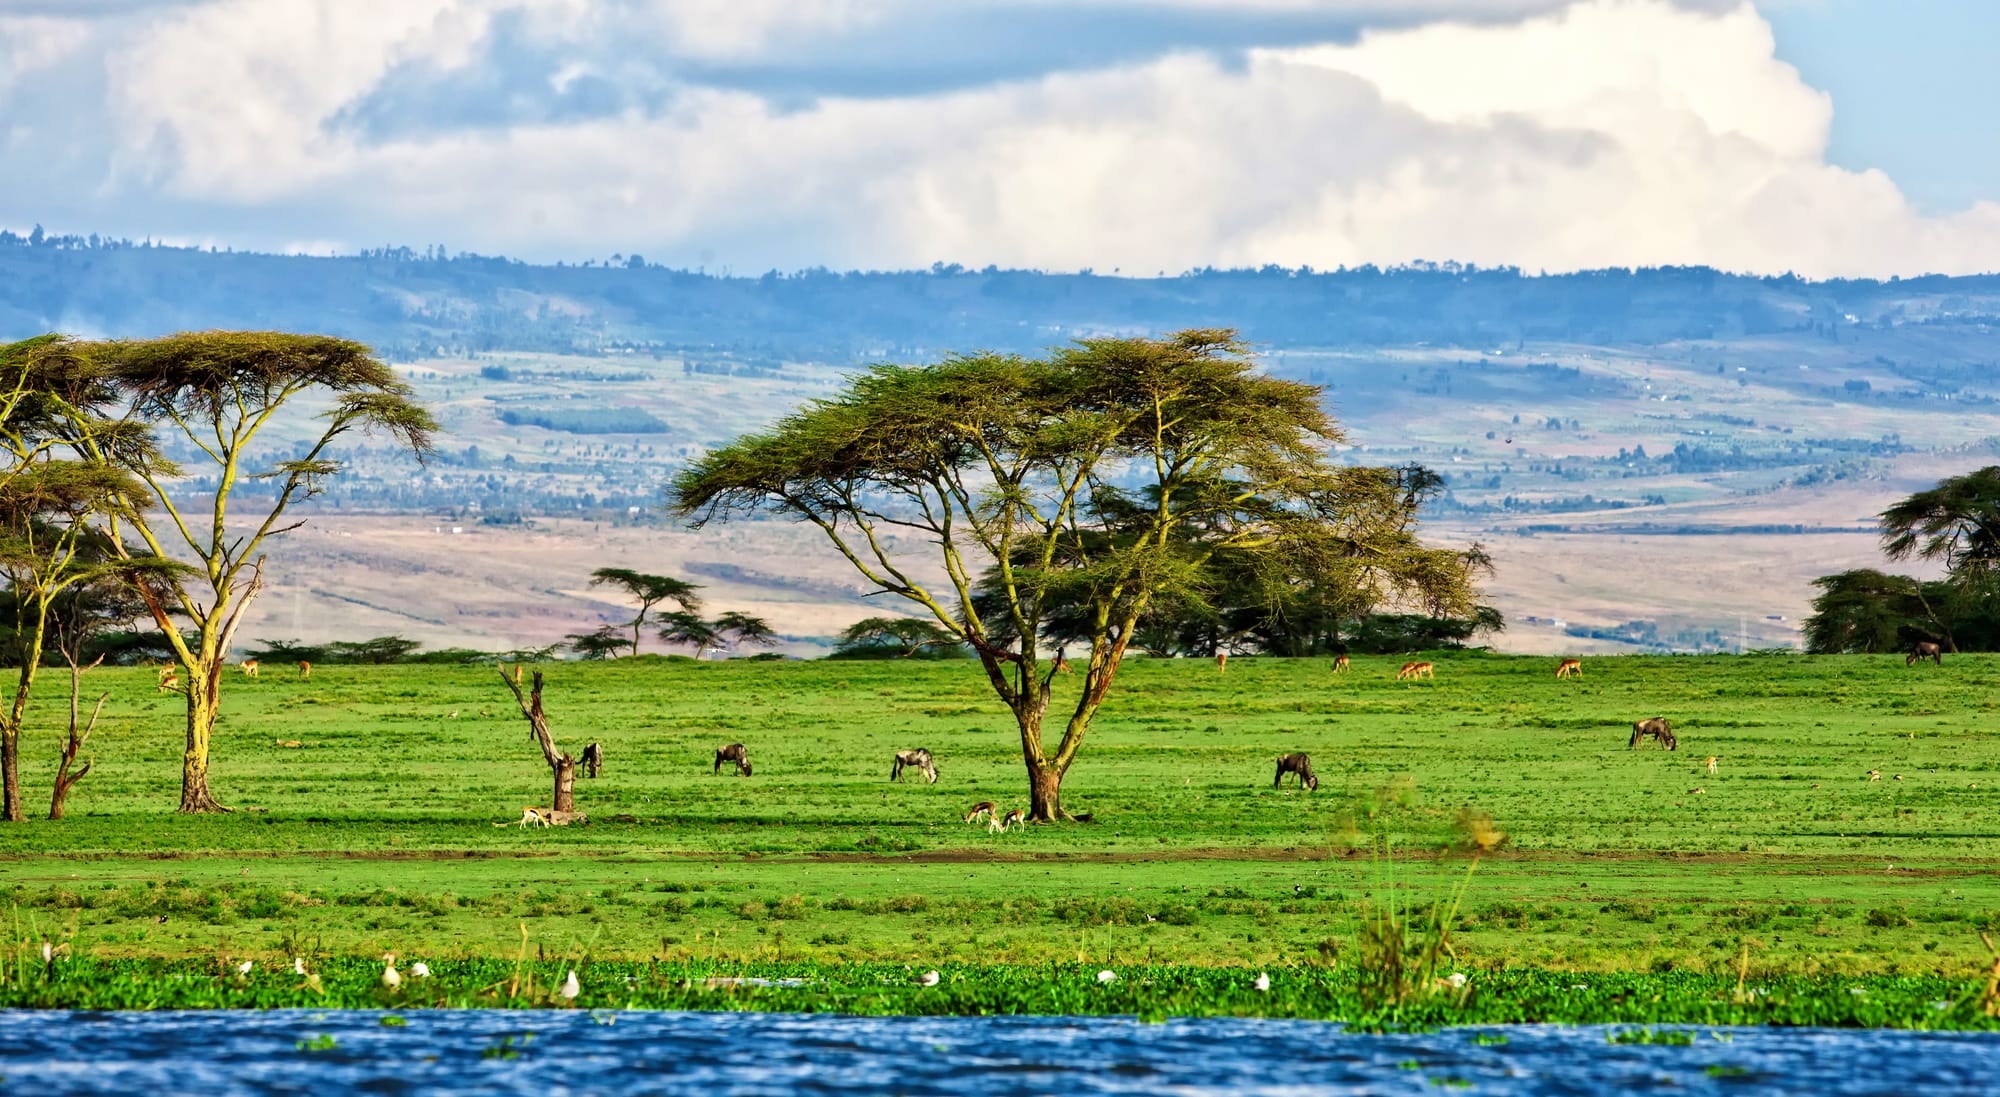 Experience the Serengeti in Tanzania